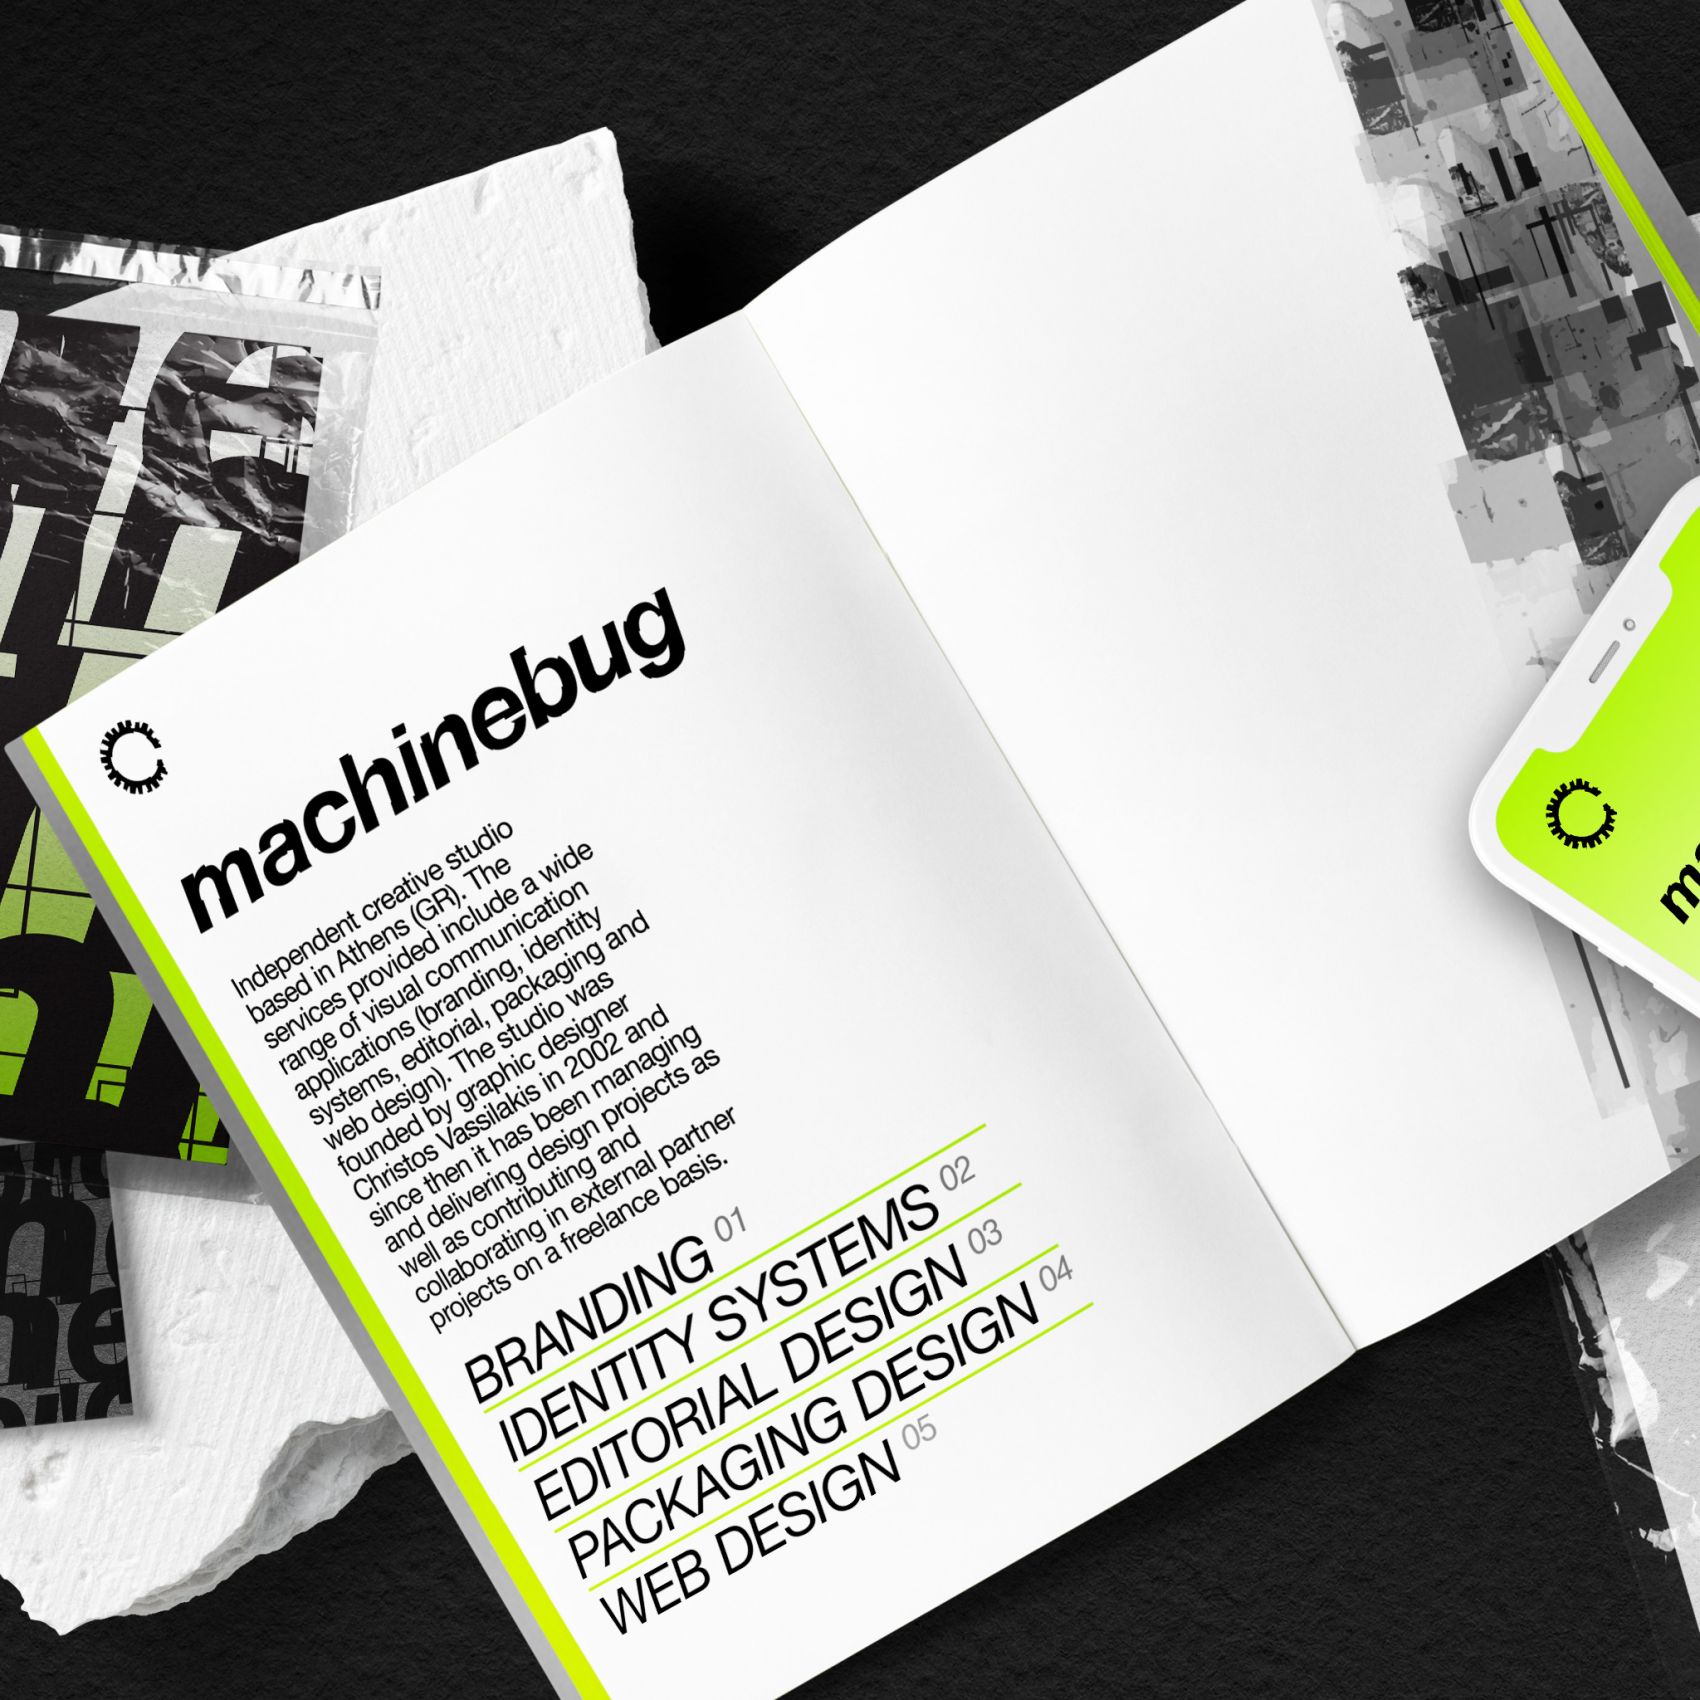 machinebug-communication-design-studio